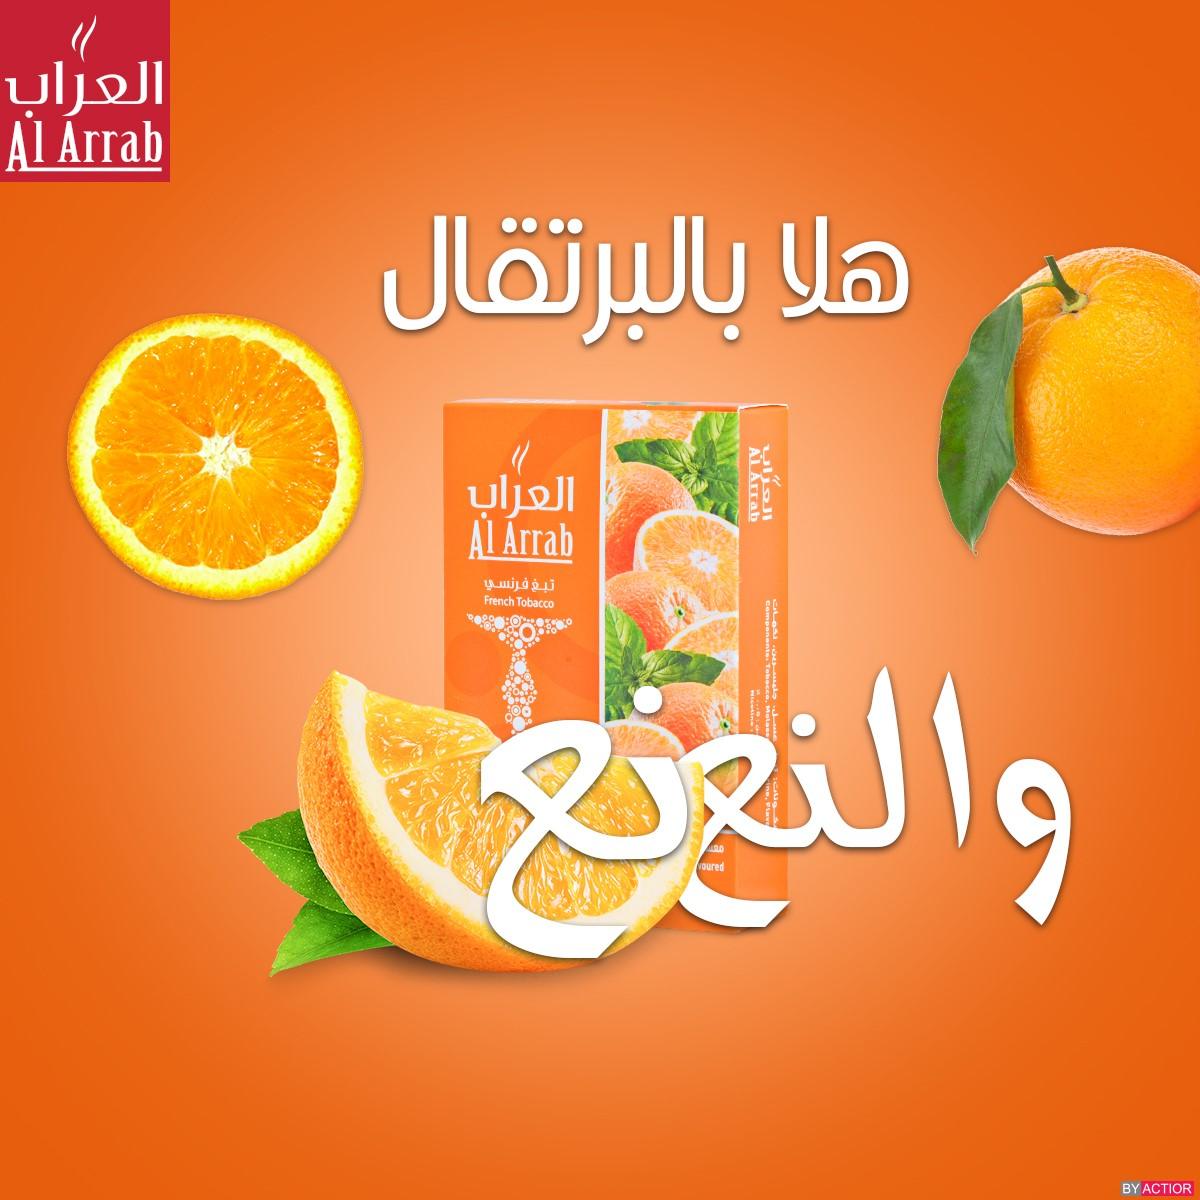 Al Arrab Molasses Orange Mint  - معسّل العراب برتقال و نعنع - Shishabox